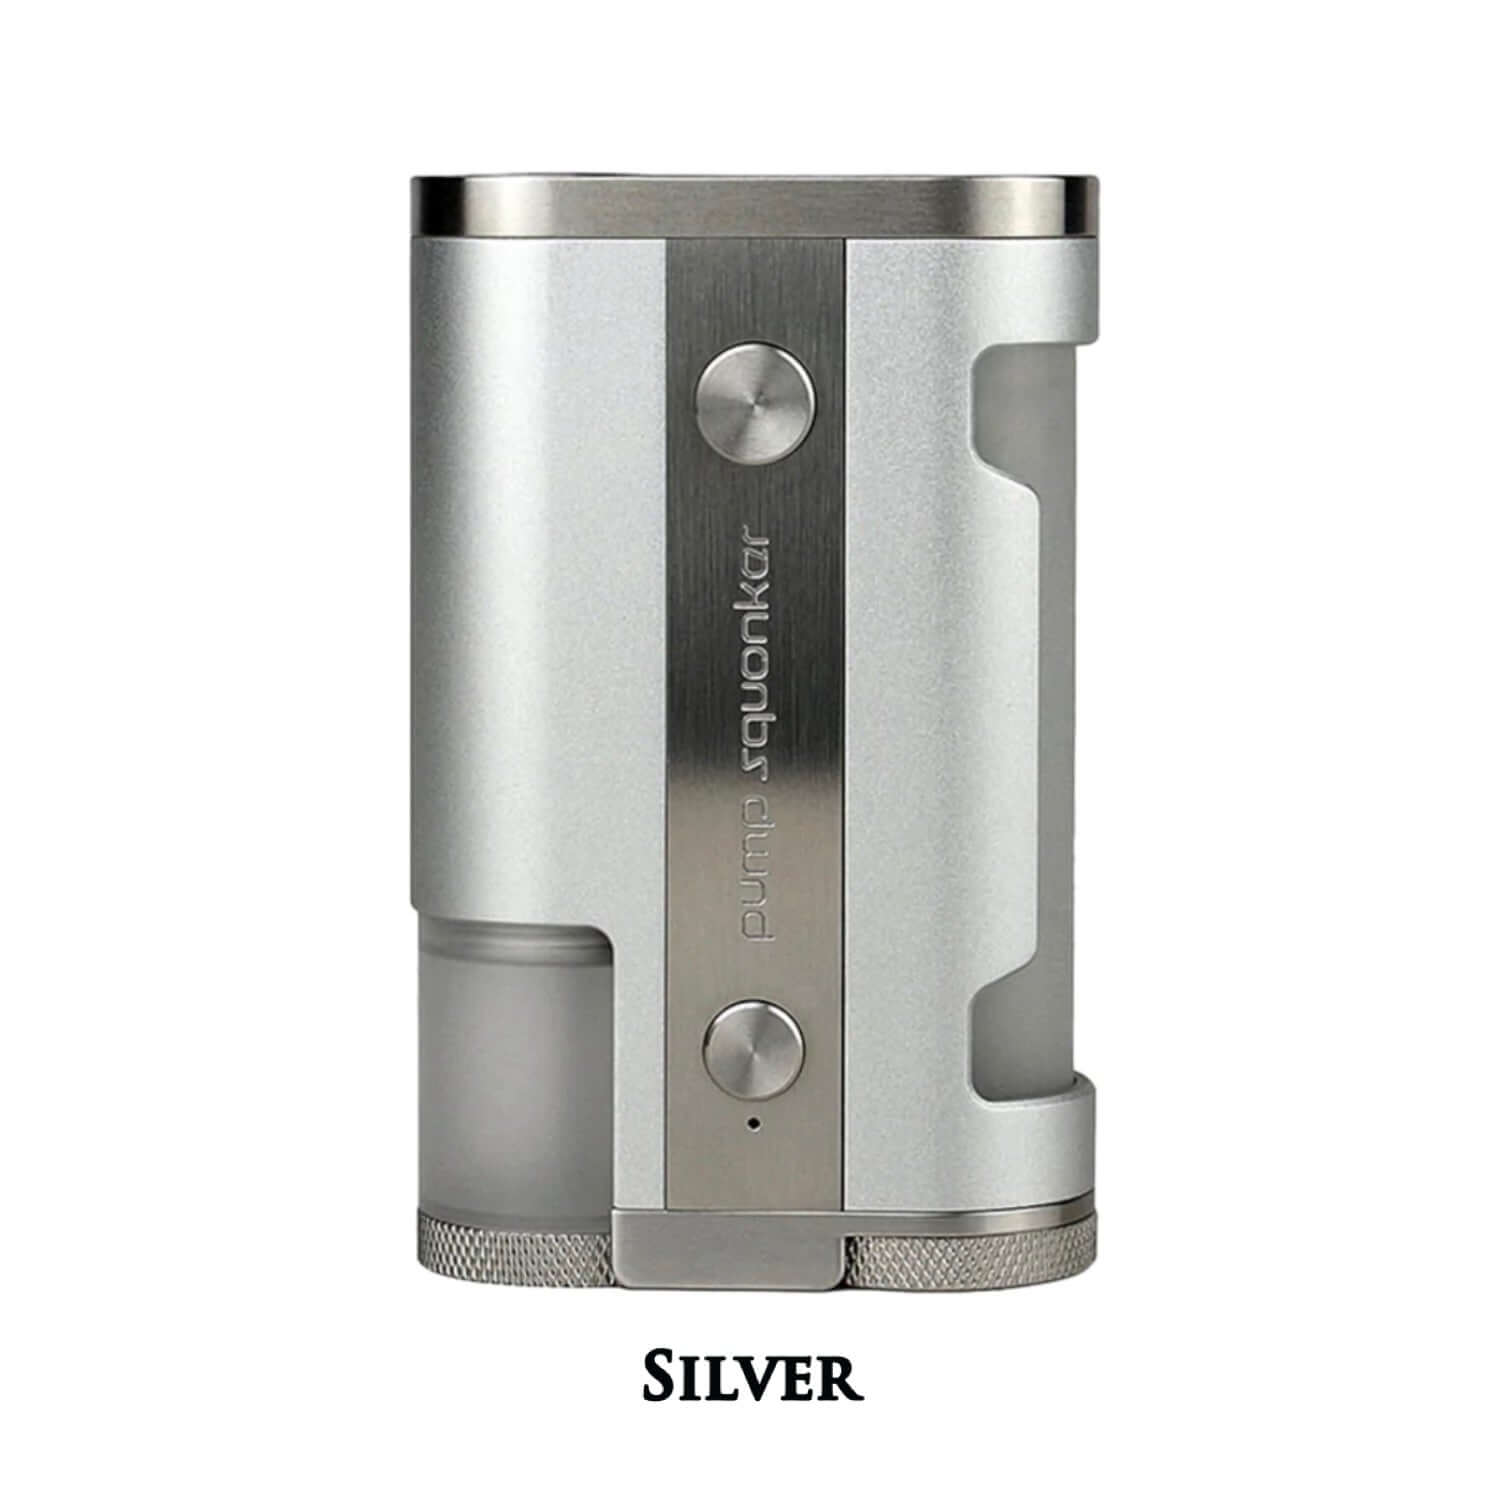 Pump Squonker in Silver. Squonk Vape Mod by Dovpo X Across at LegioX Vape UK